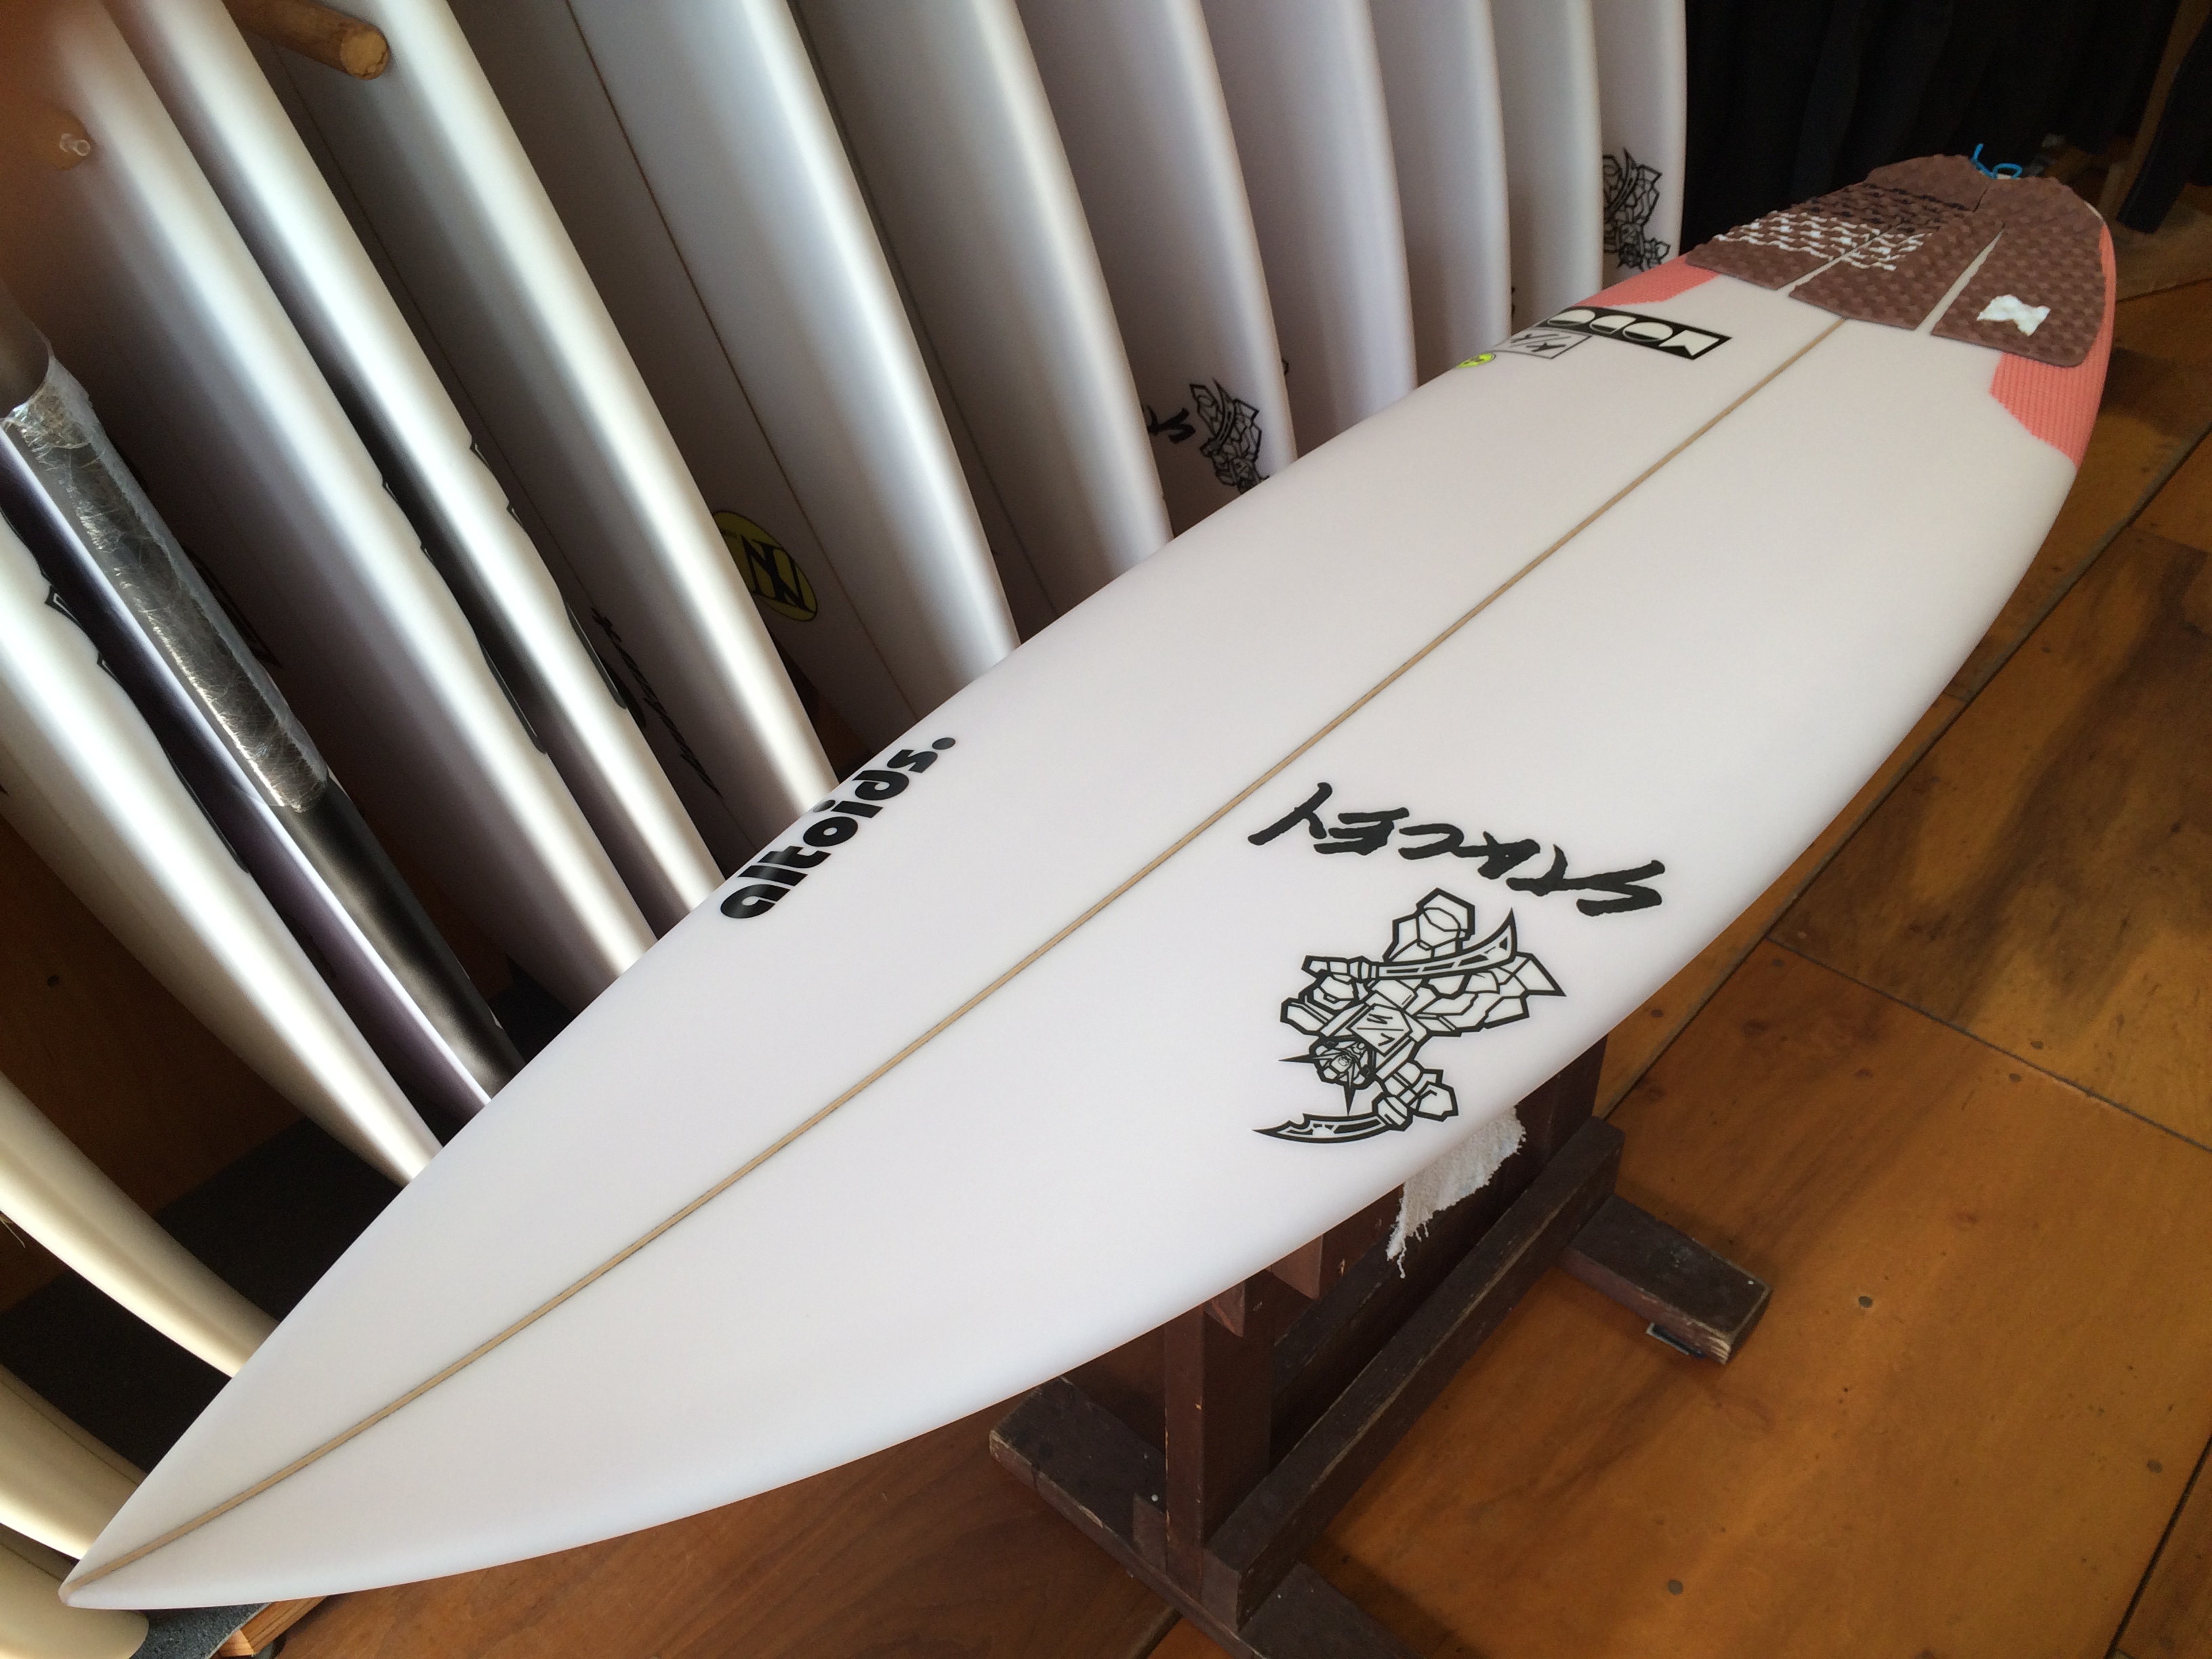 【GODZILLA】STACEY SURFBOARDS | サーフィンスクール 千葉市稲毛のサーフィン専門ショップ アルトイズサーフ